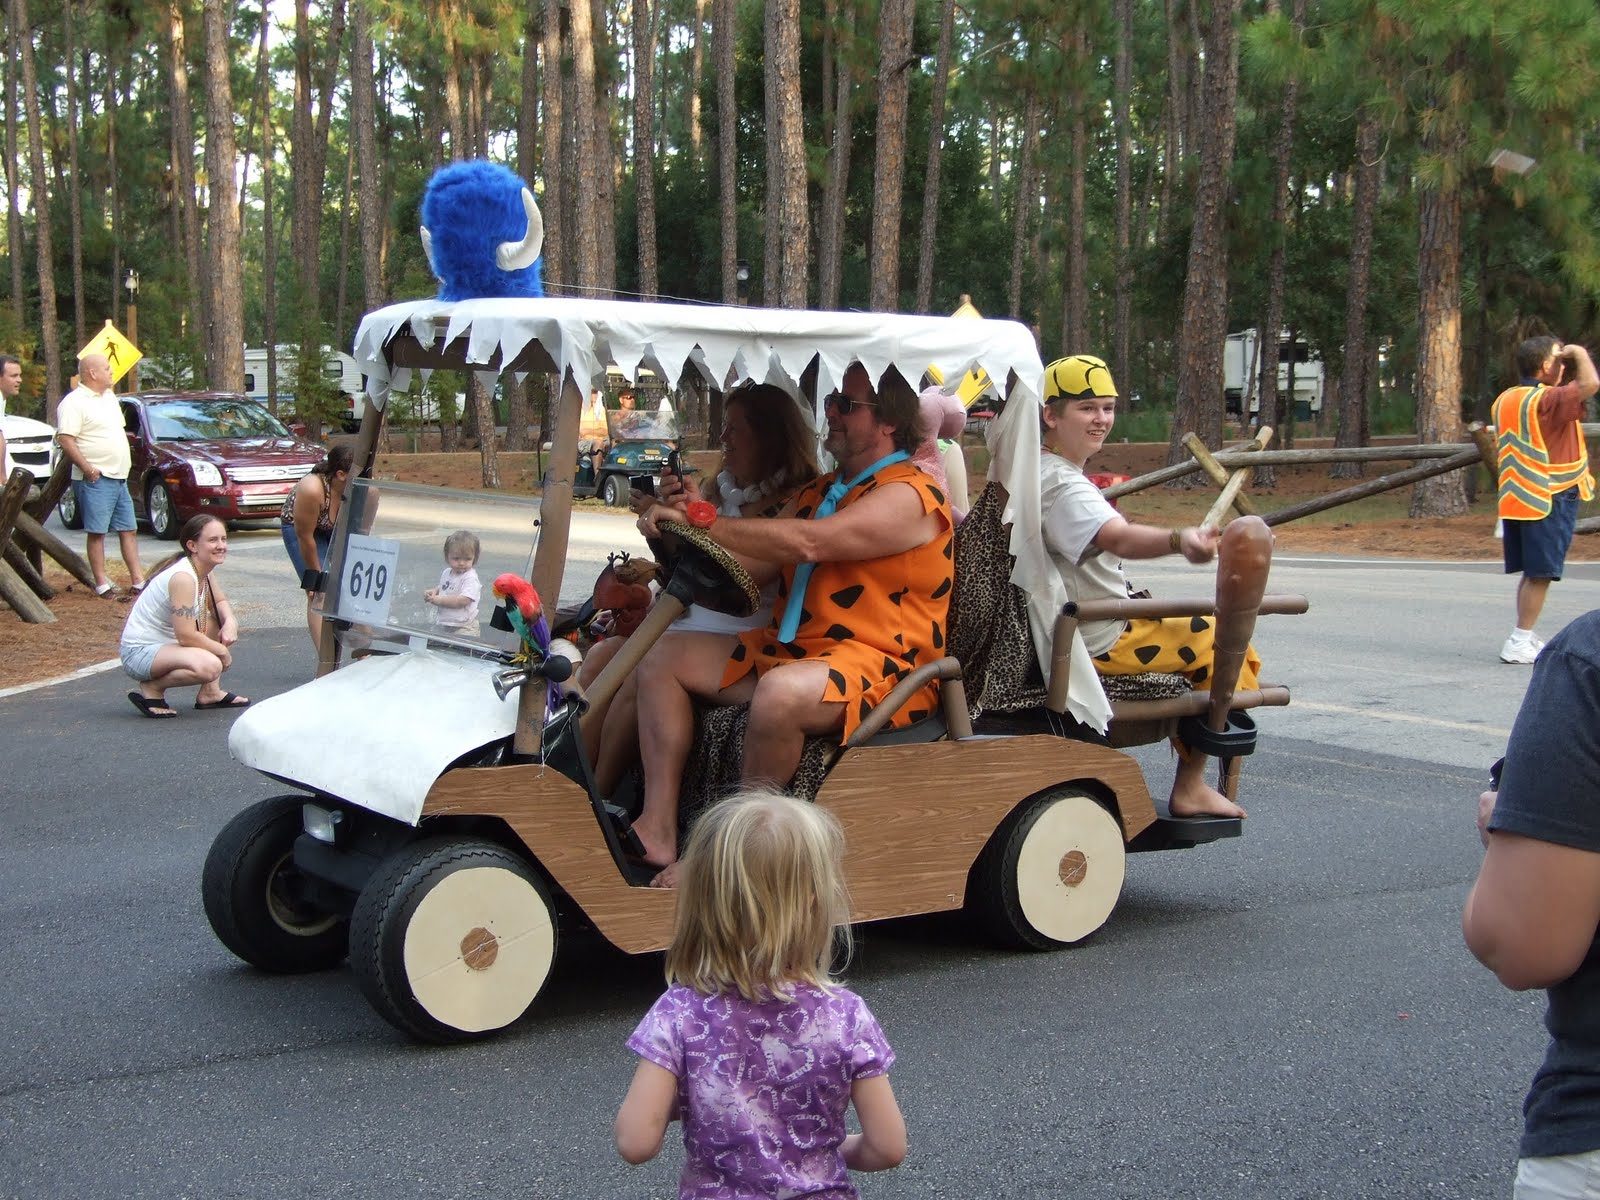 golf cart decorated as The Flintstones car